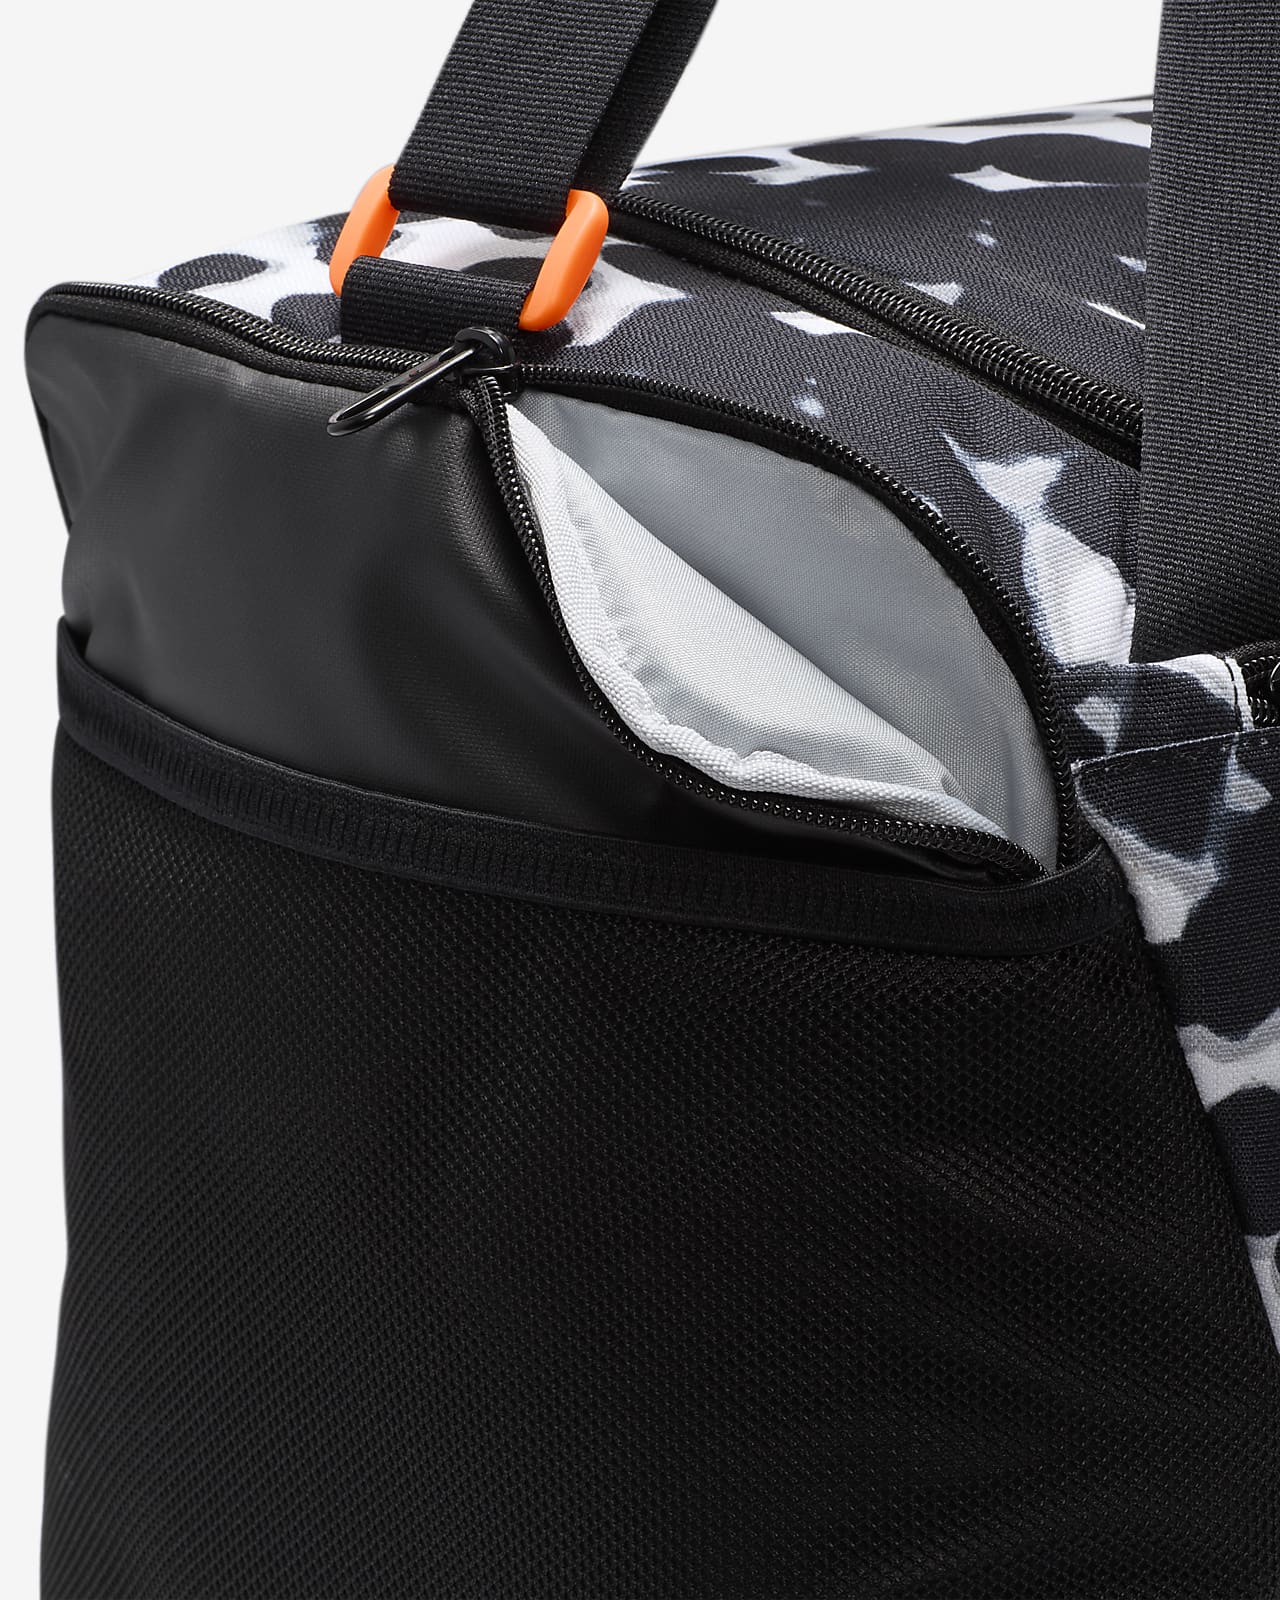 Nike Brasilia 9.5 Training Duffel Bag (Small, 41L). Nike CH